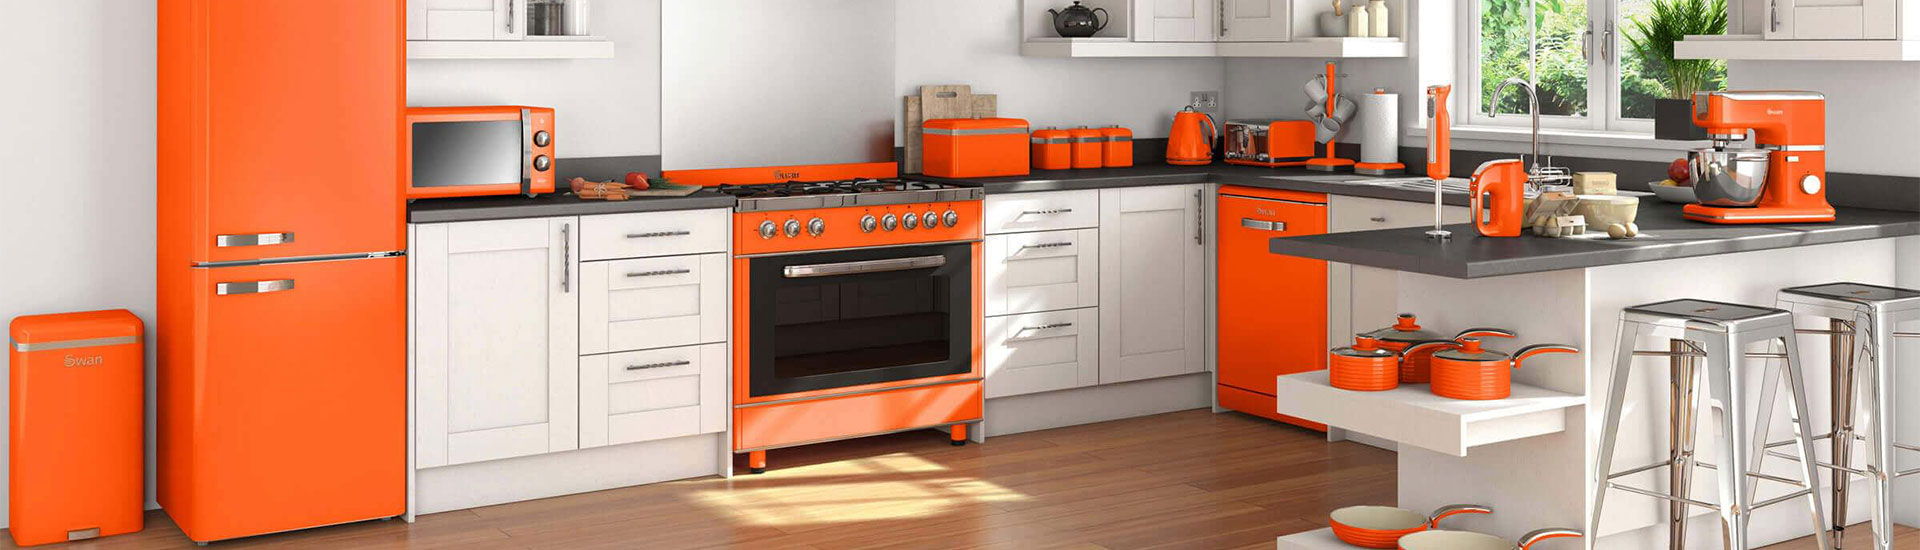 Orange Oven Wraps